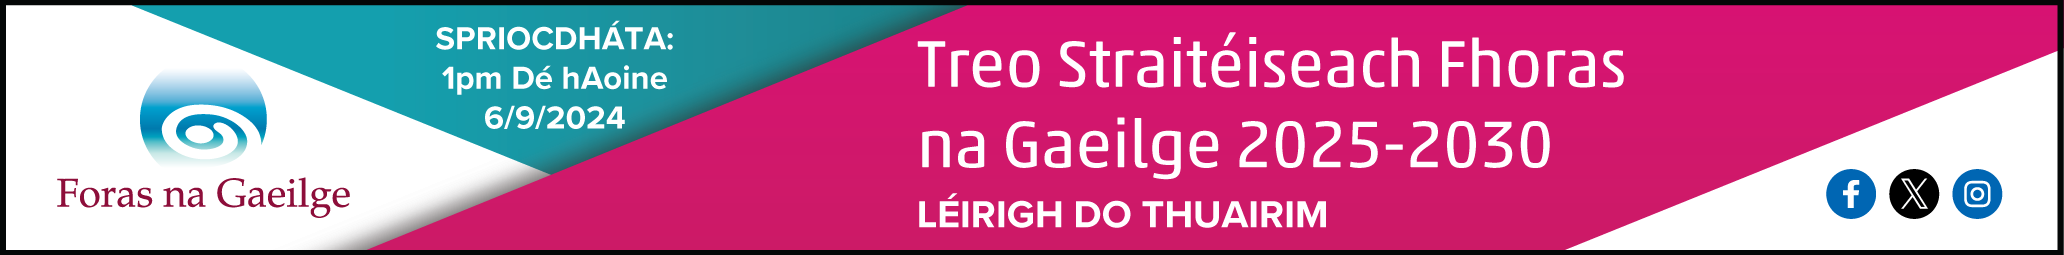 Foras na Gaeilge Brat 0624